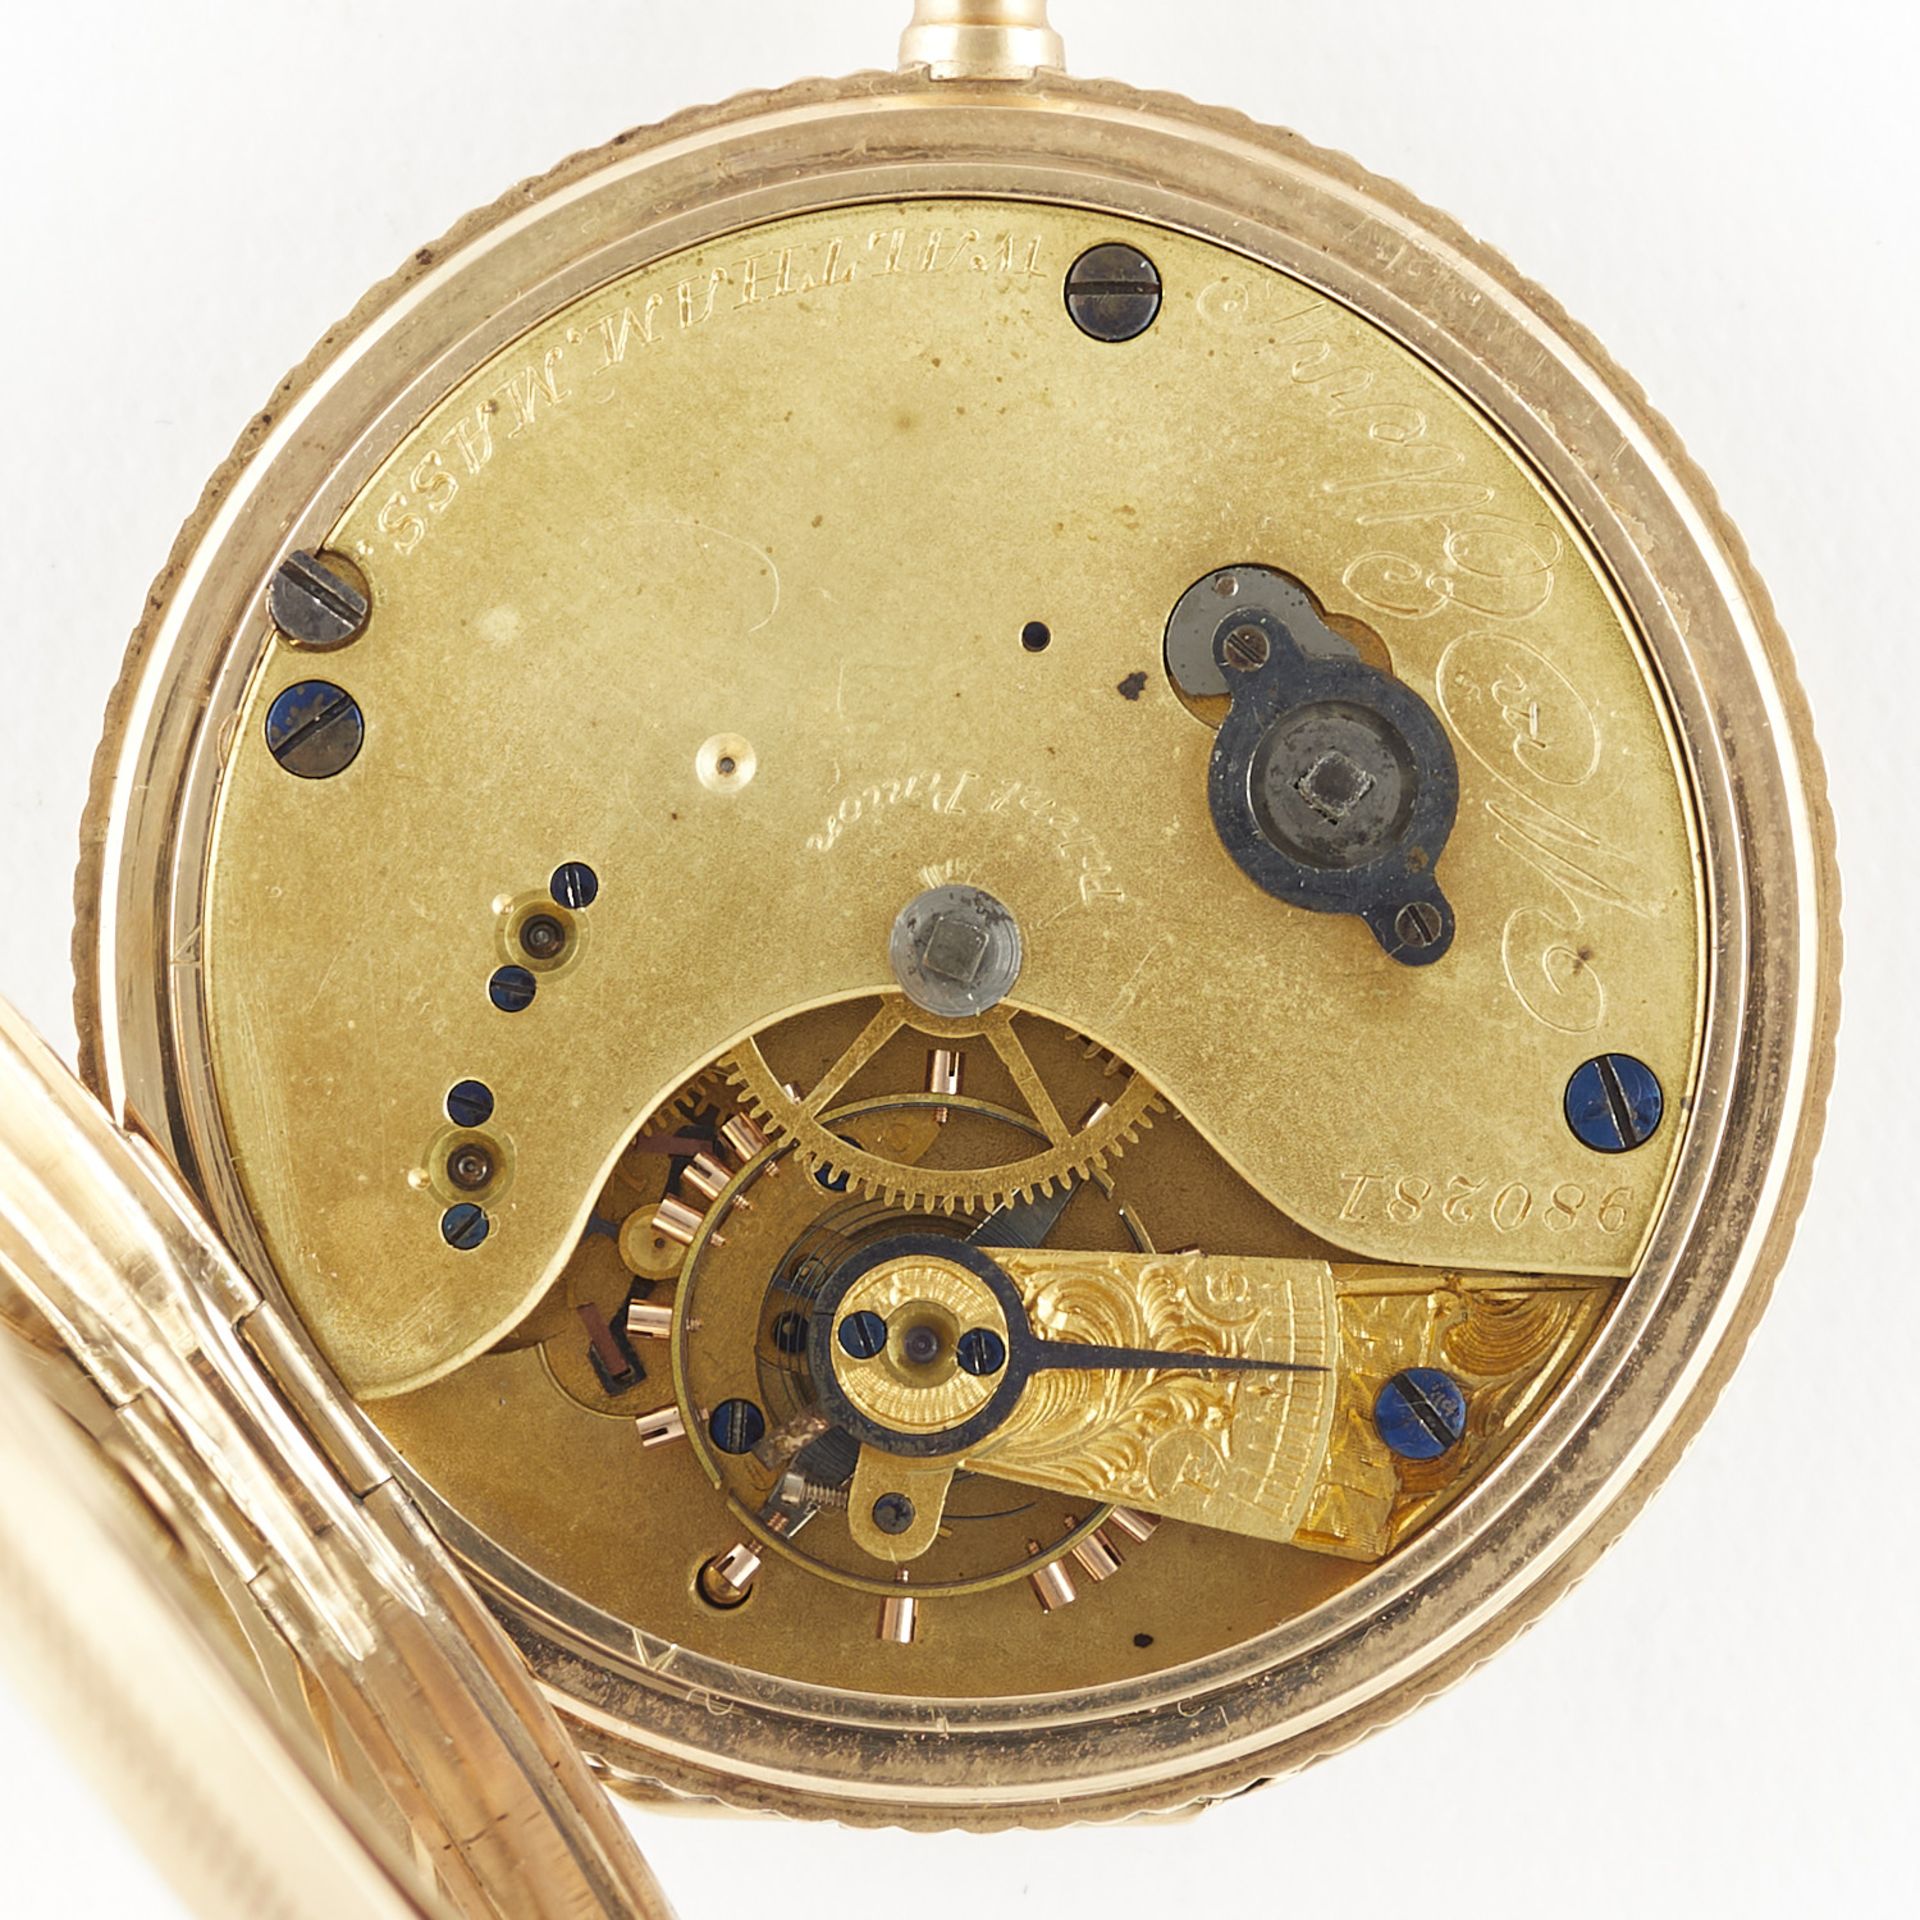 Am. Watch Co. William Ellery Pocket Watch - Image 5 of 8